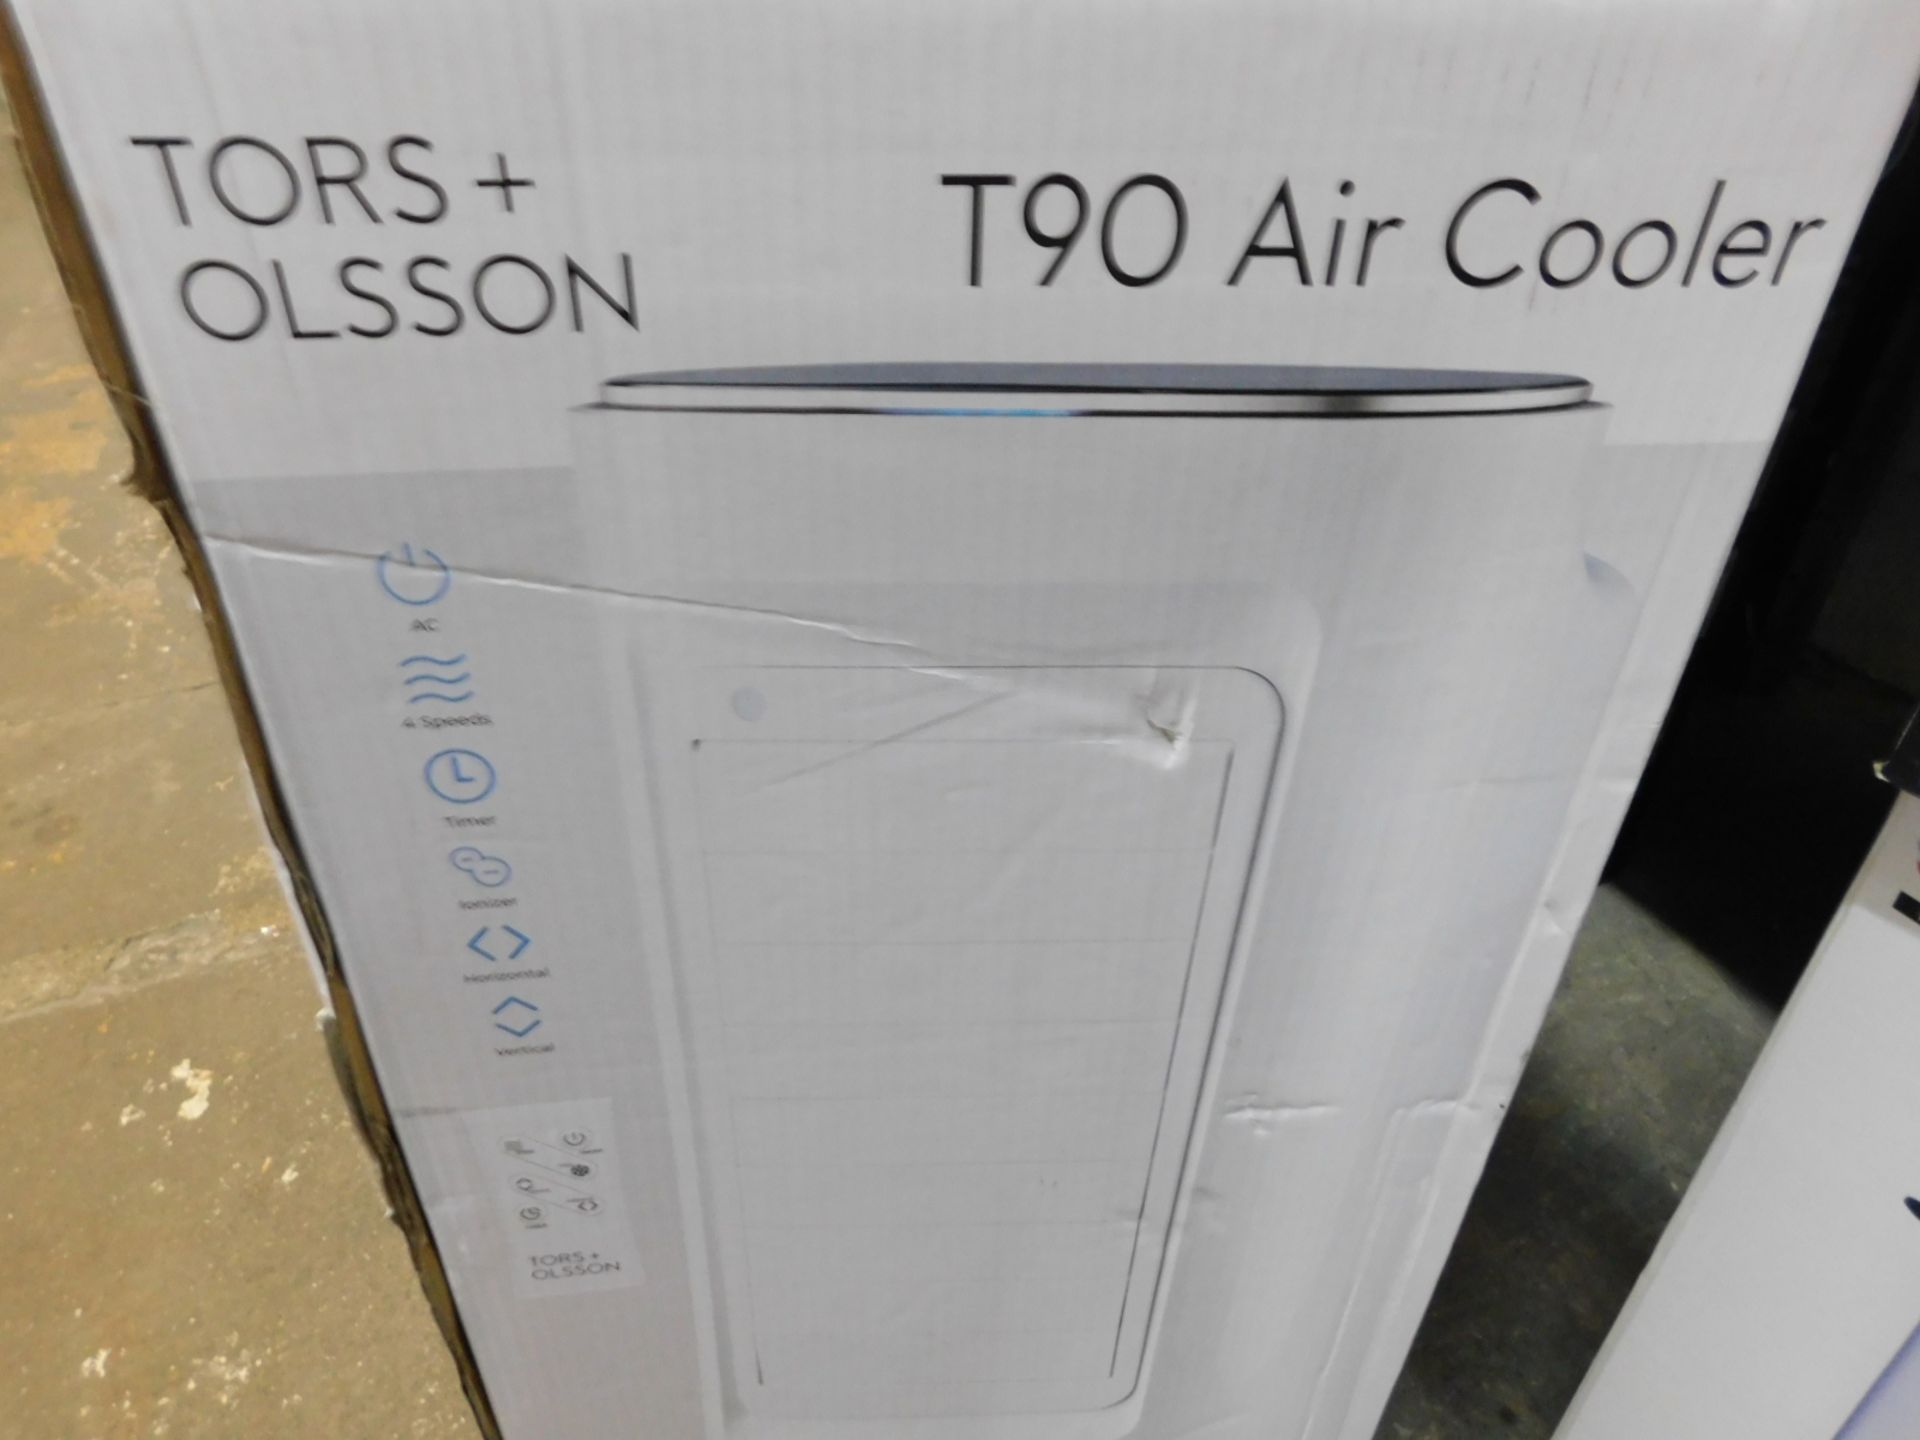 1 BOXED TORS + OLSSON T90 AIR COOLER RRP Â£149.99